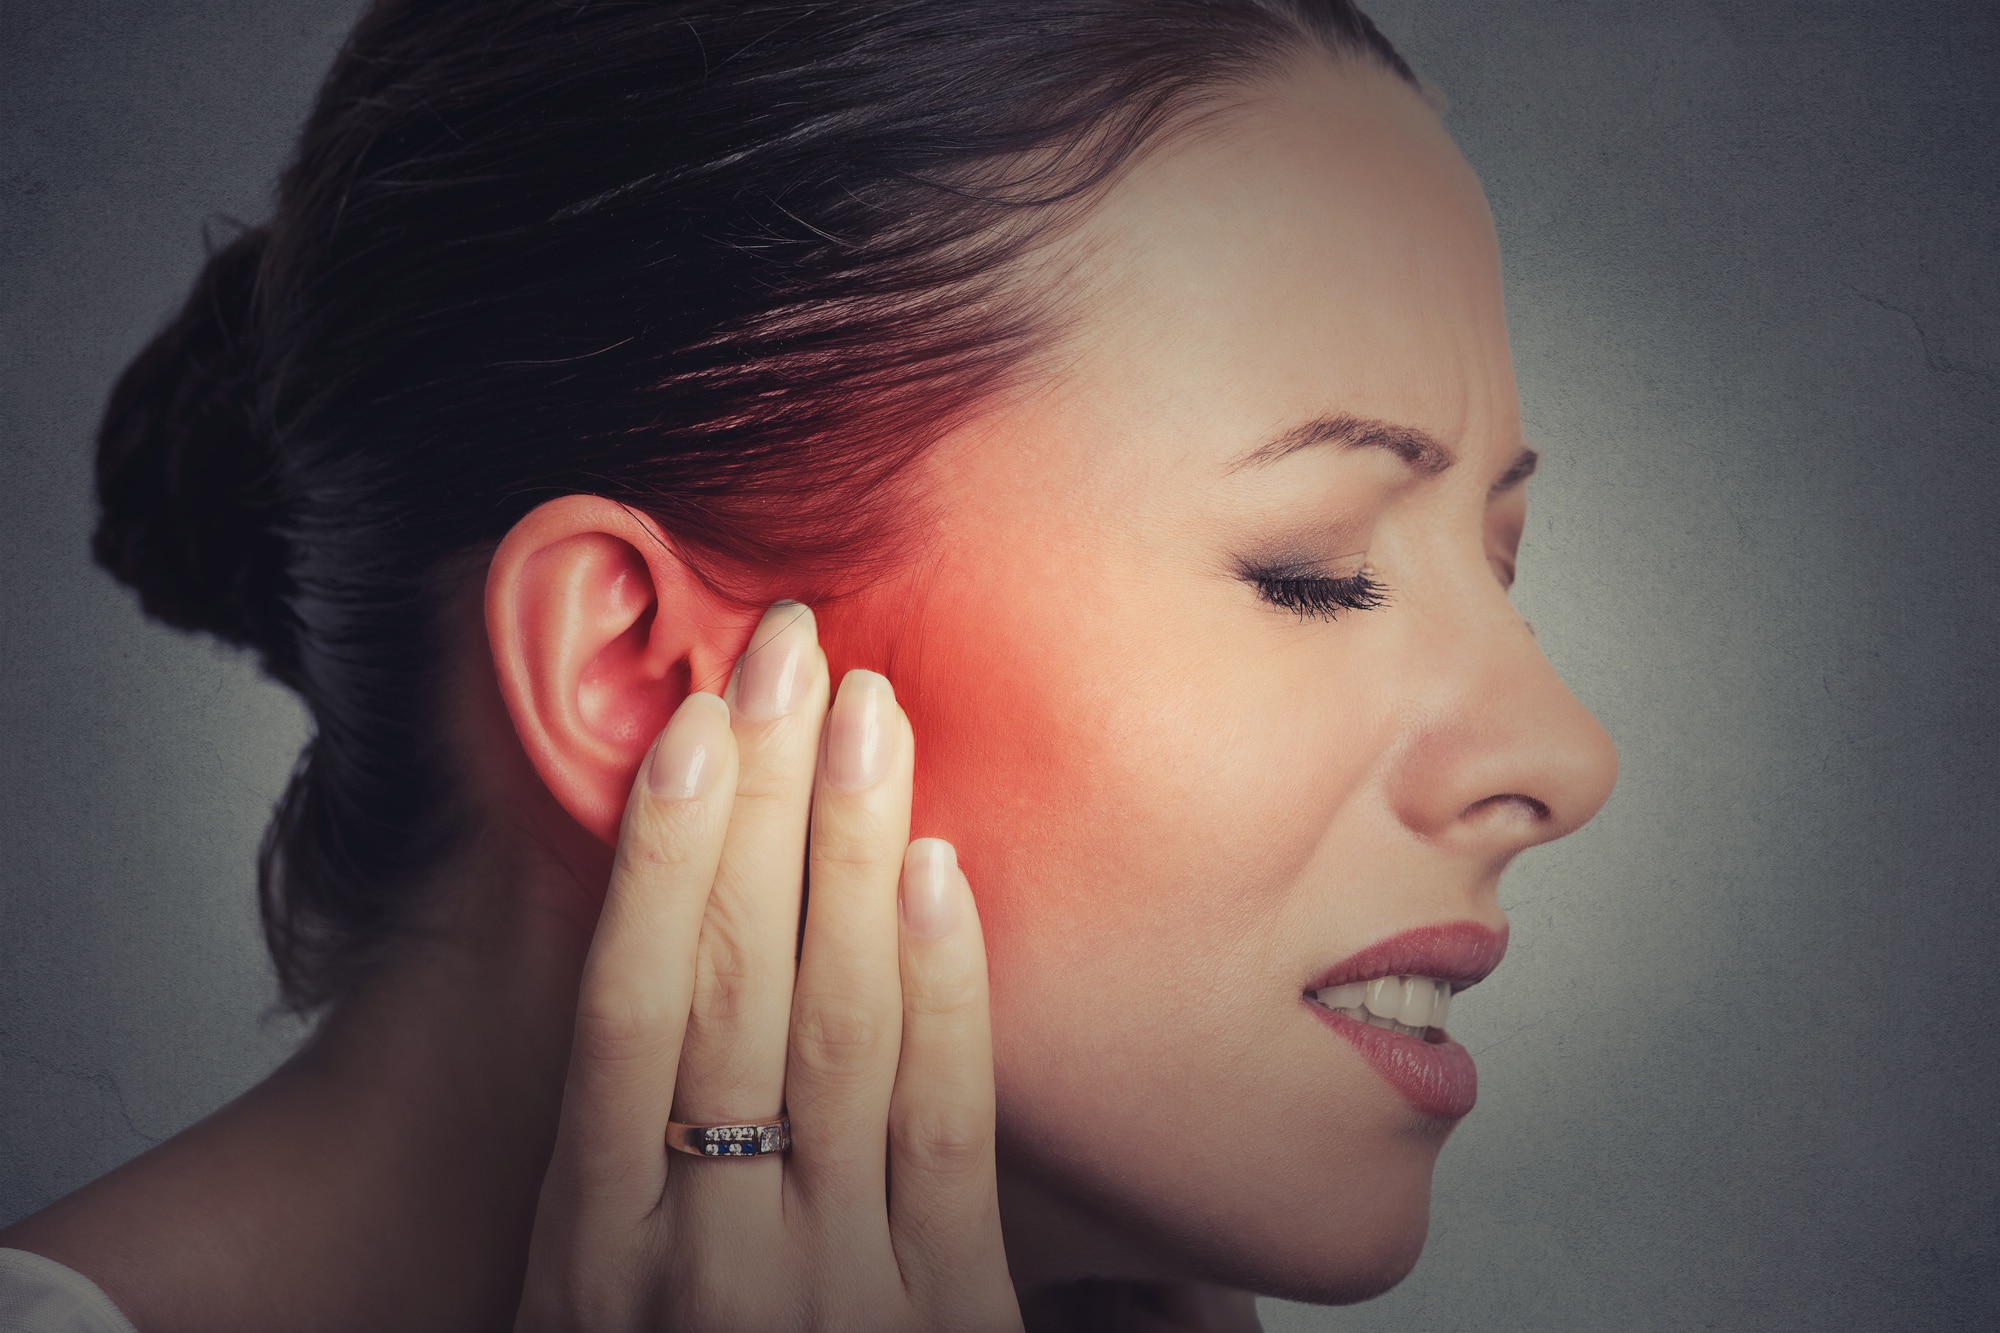 woman touching ear in pain